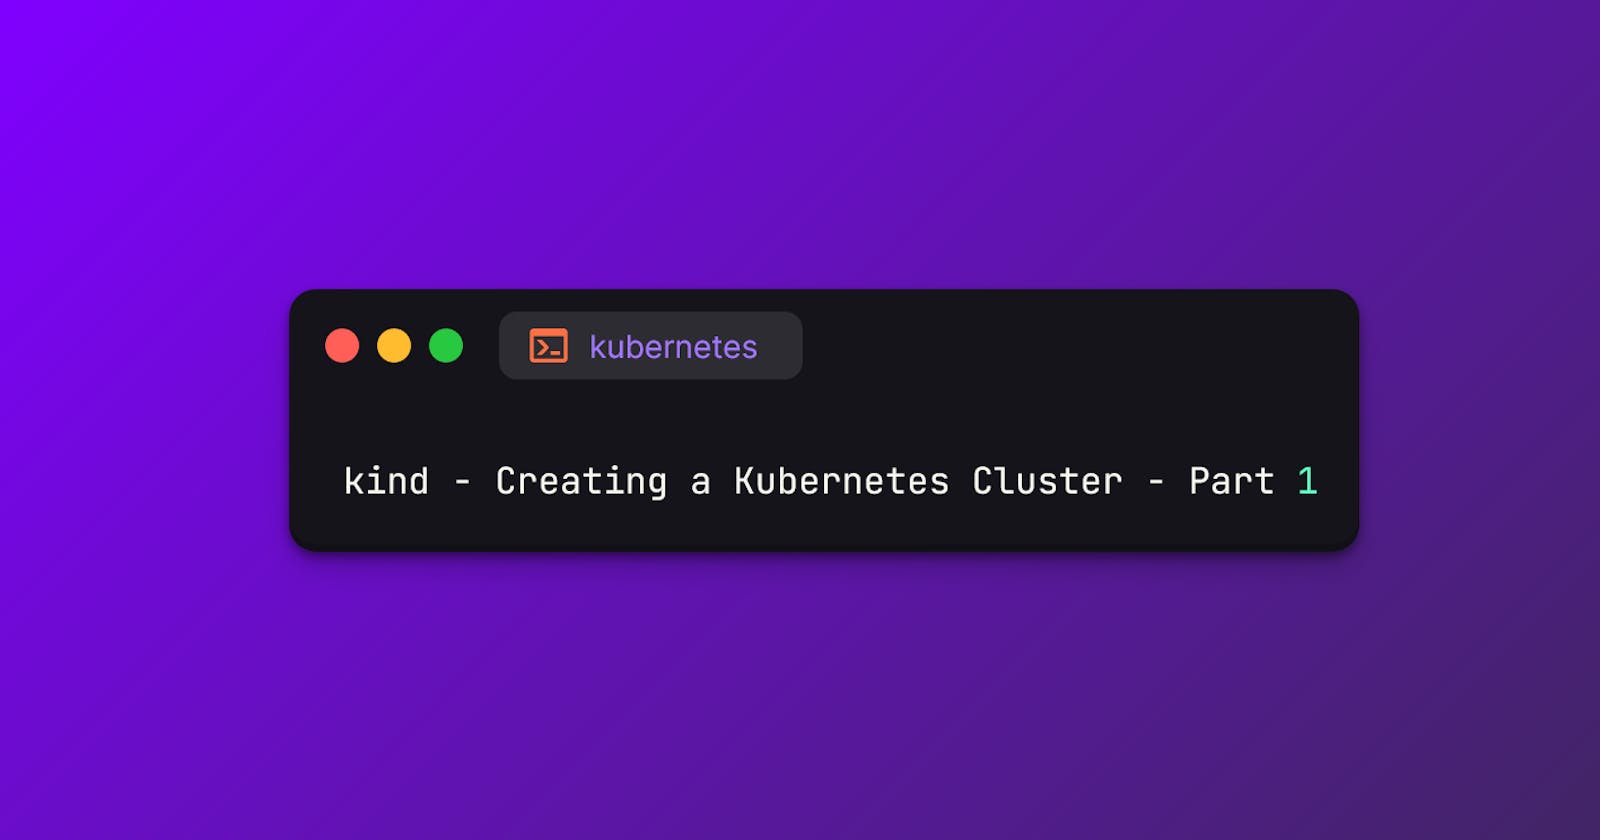 kind - Creating a Kubernetes Cluster - Part 1